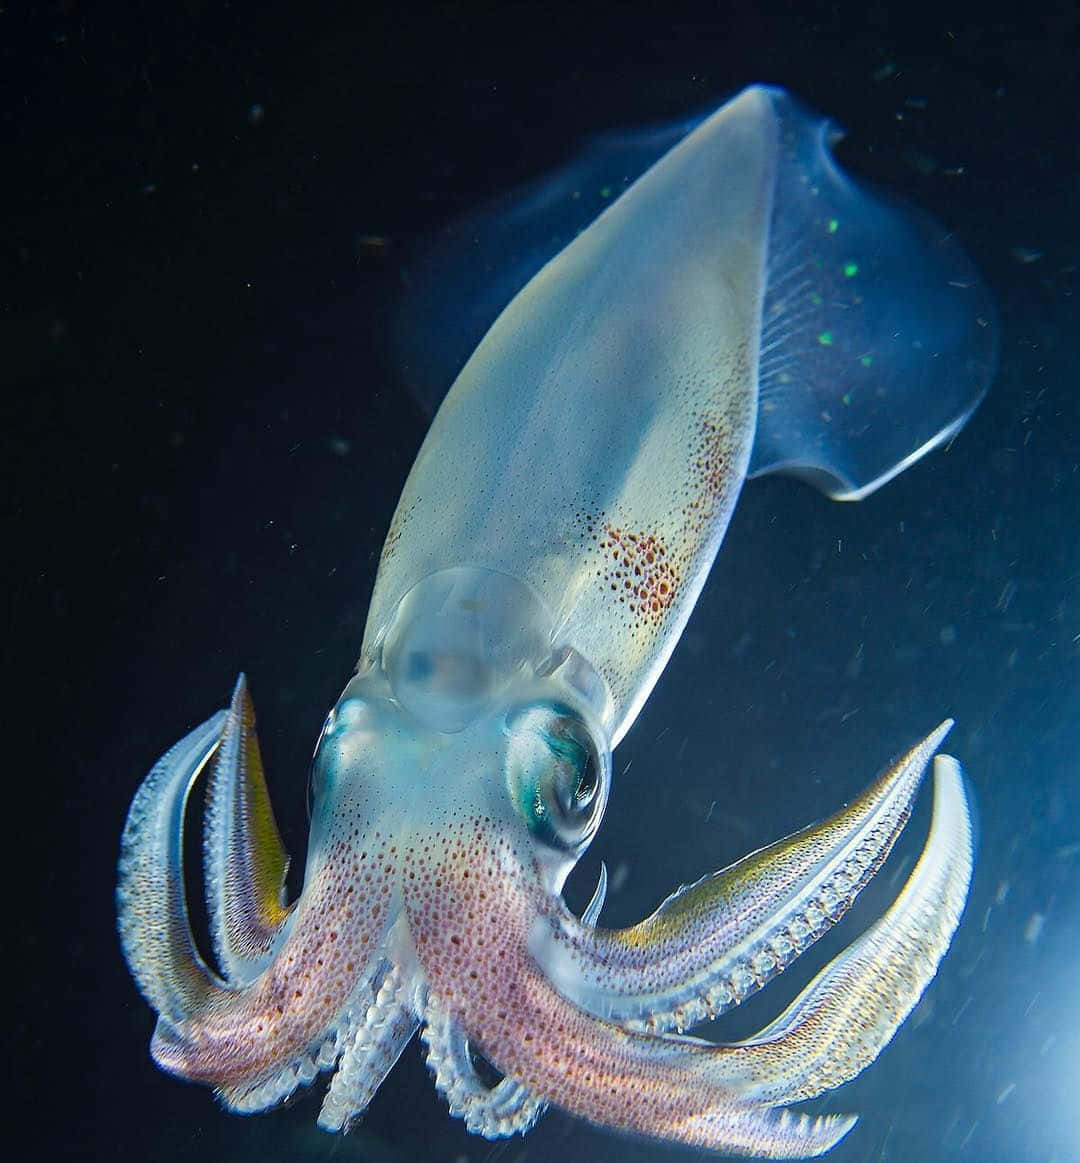 A closeup image of a squid's tentacles